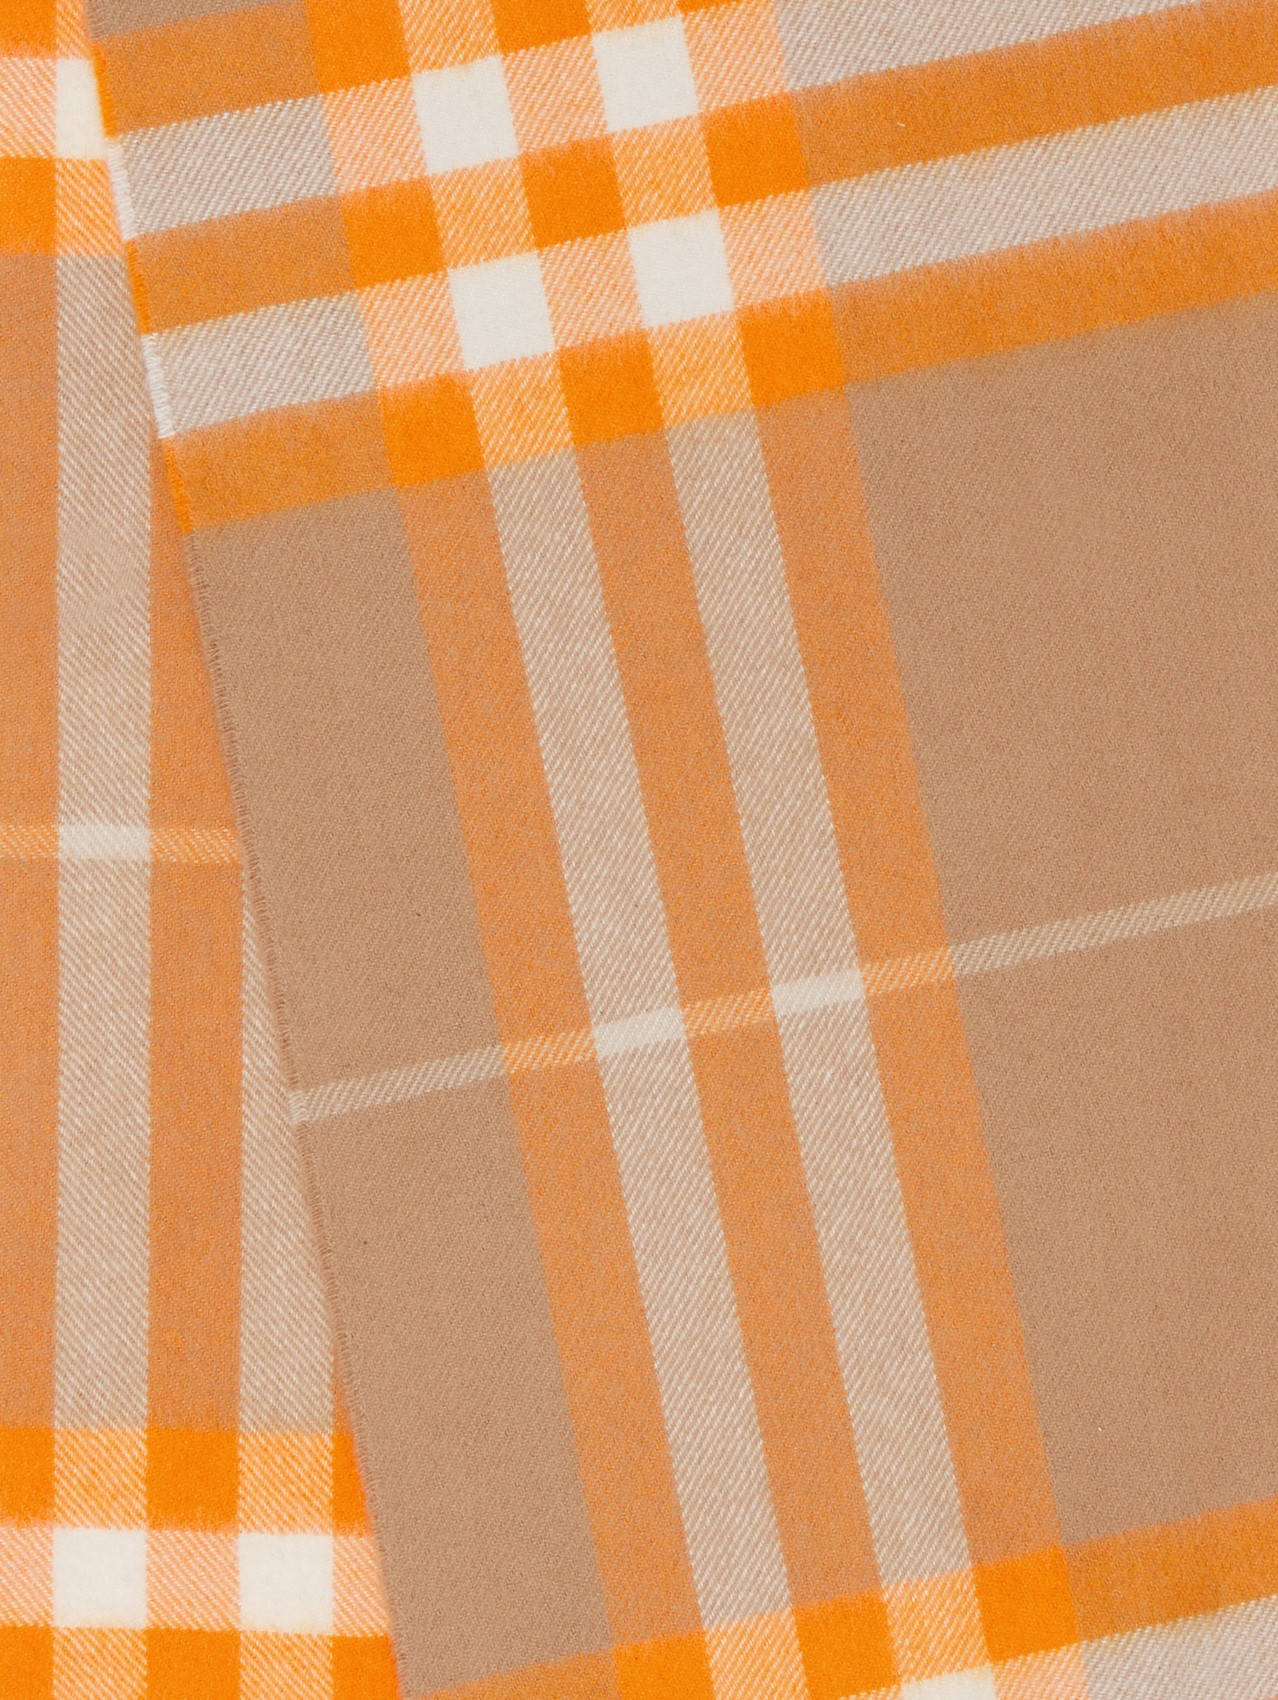 Cachecol de cashmere com estampa xadrez clássica – Exclusividade online in Camel/laranja